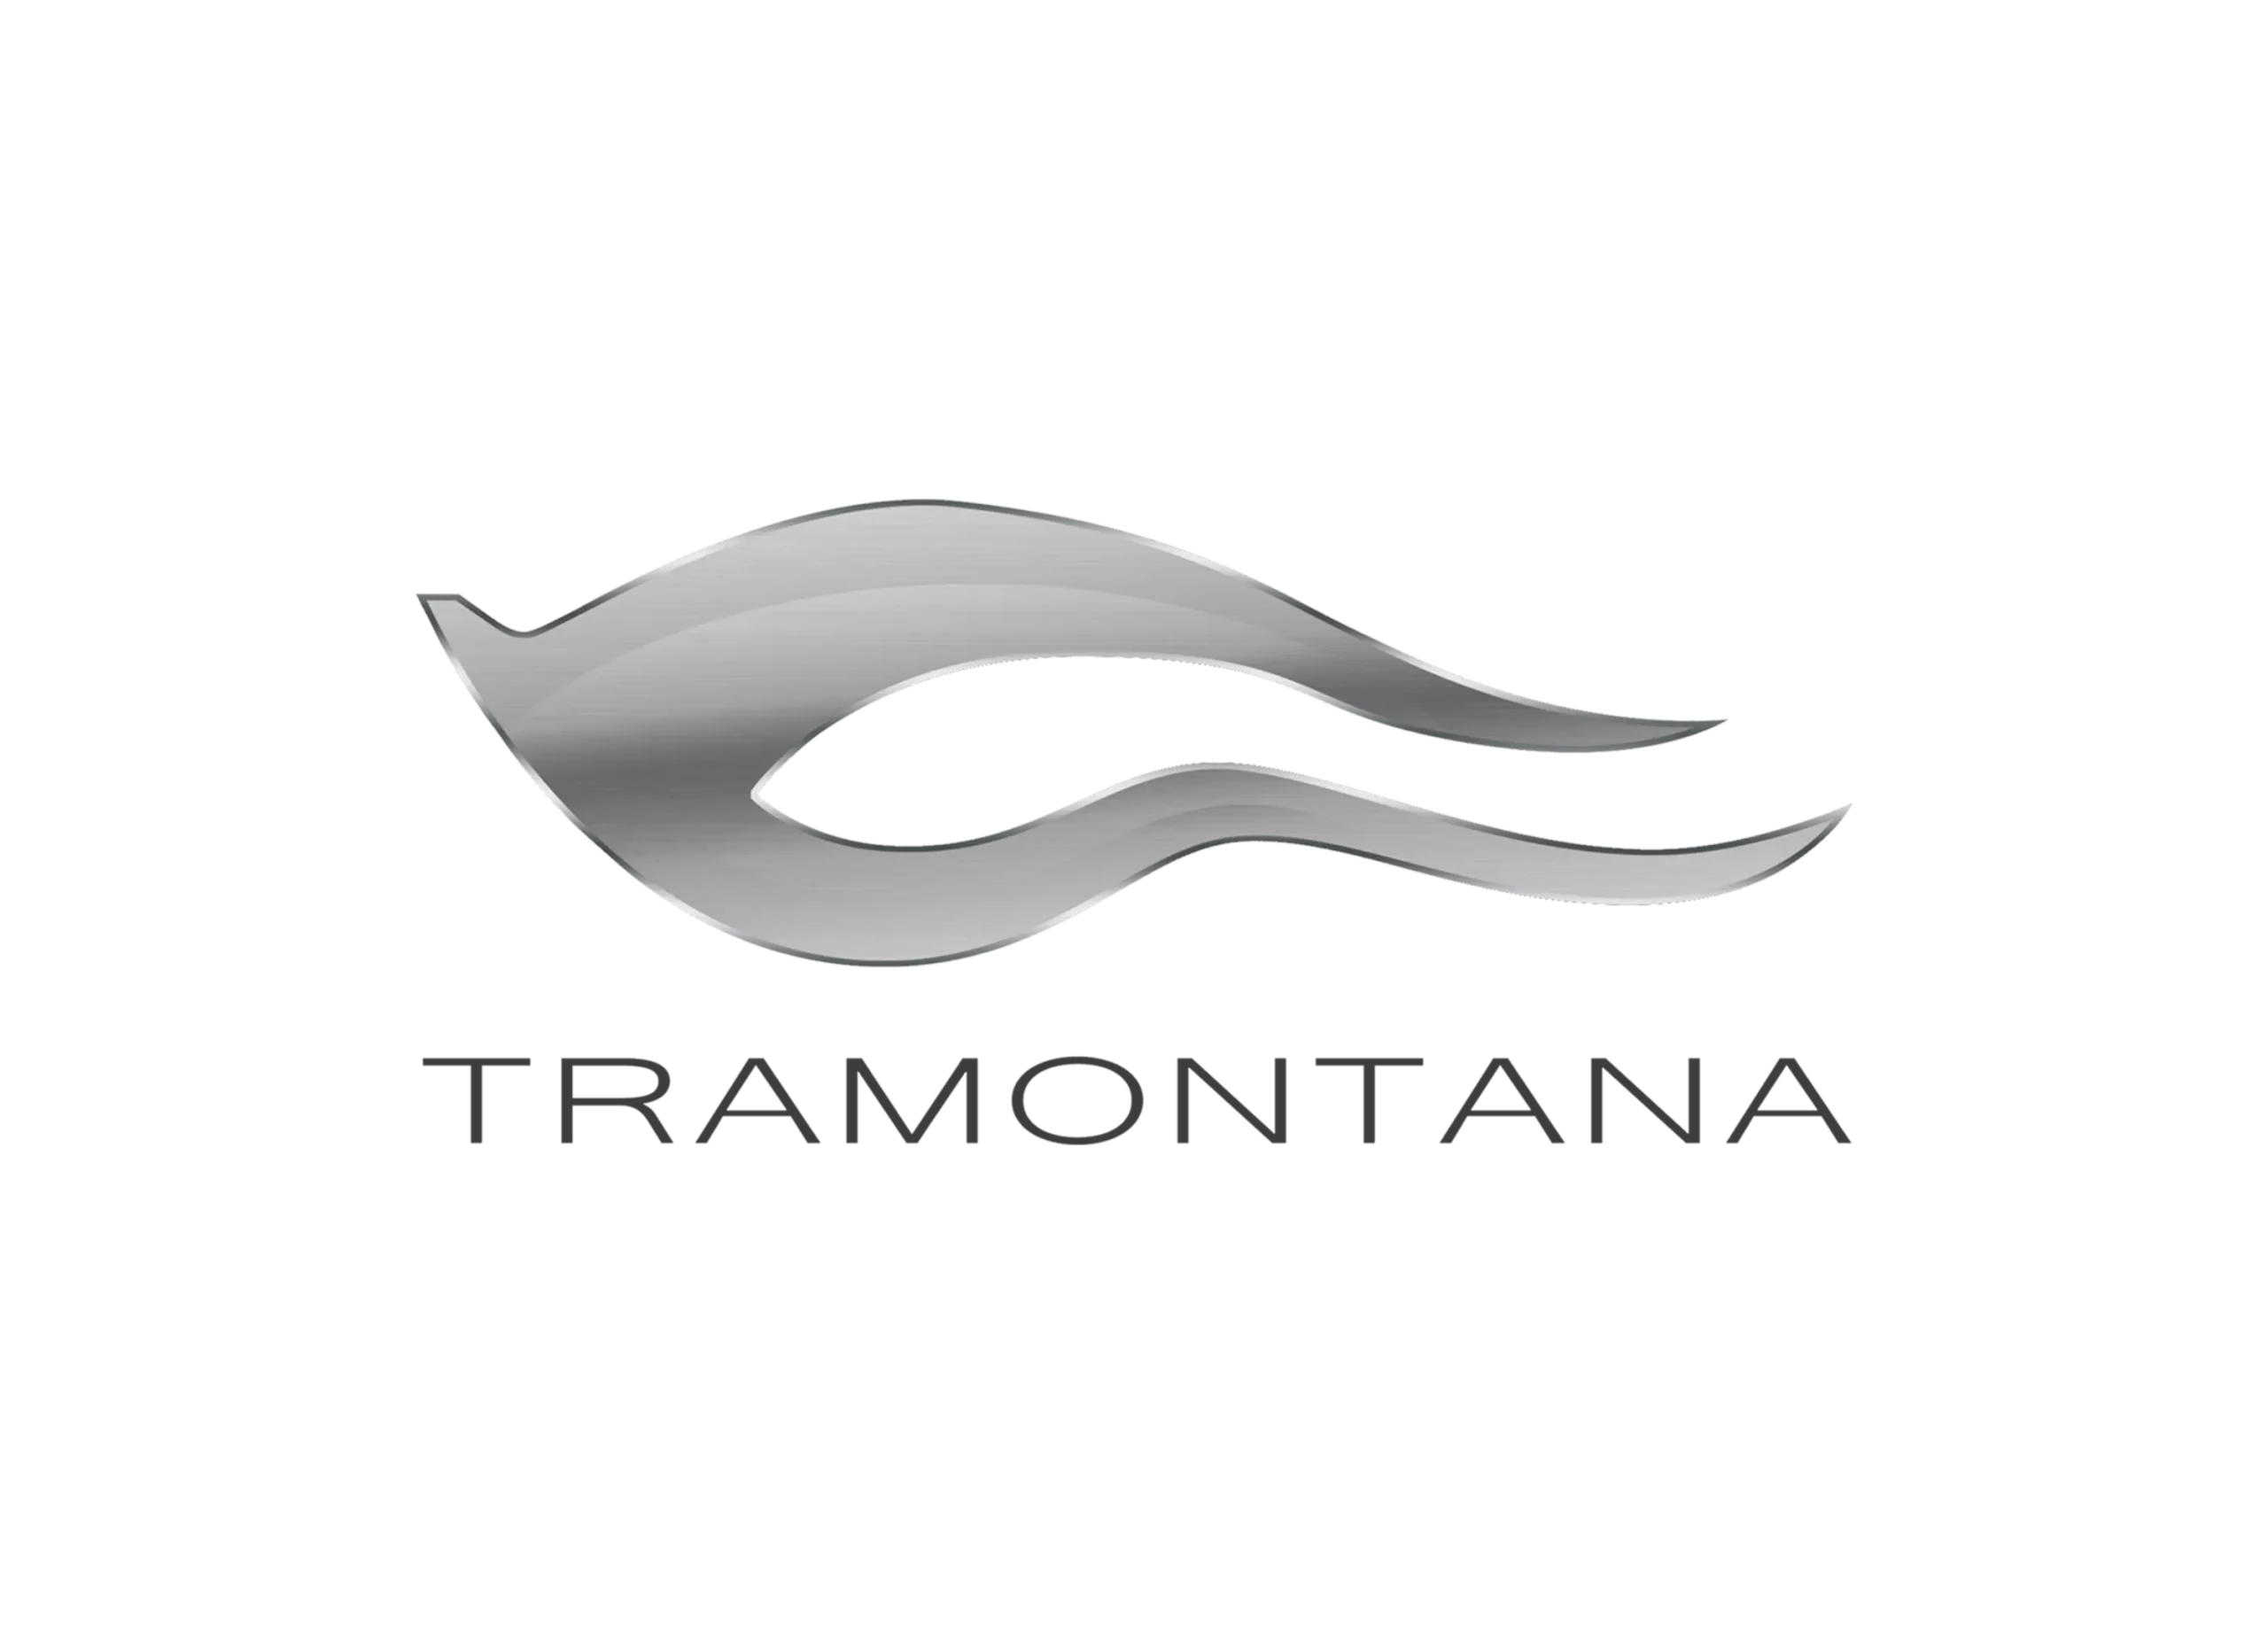 Tramontana logo